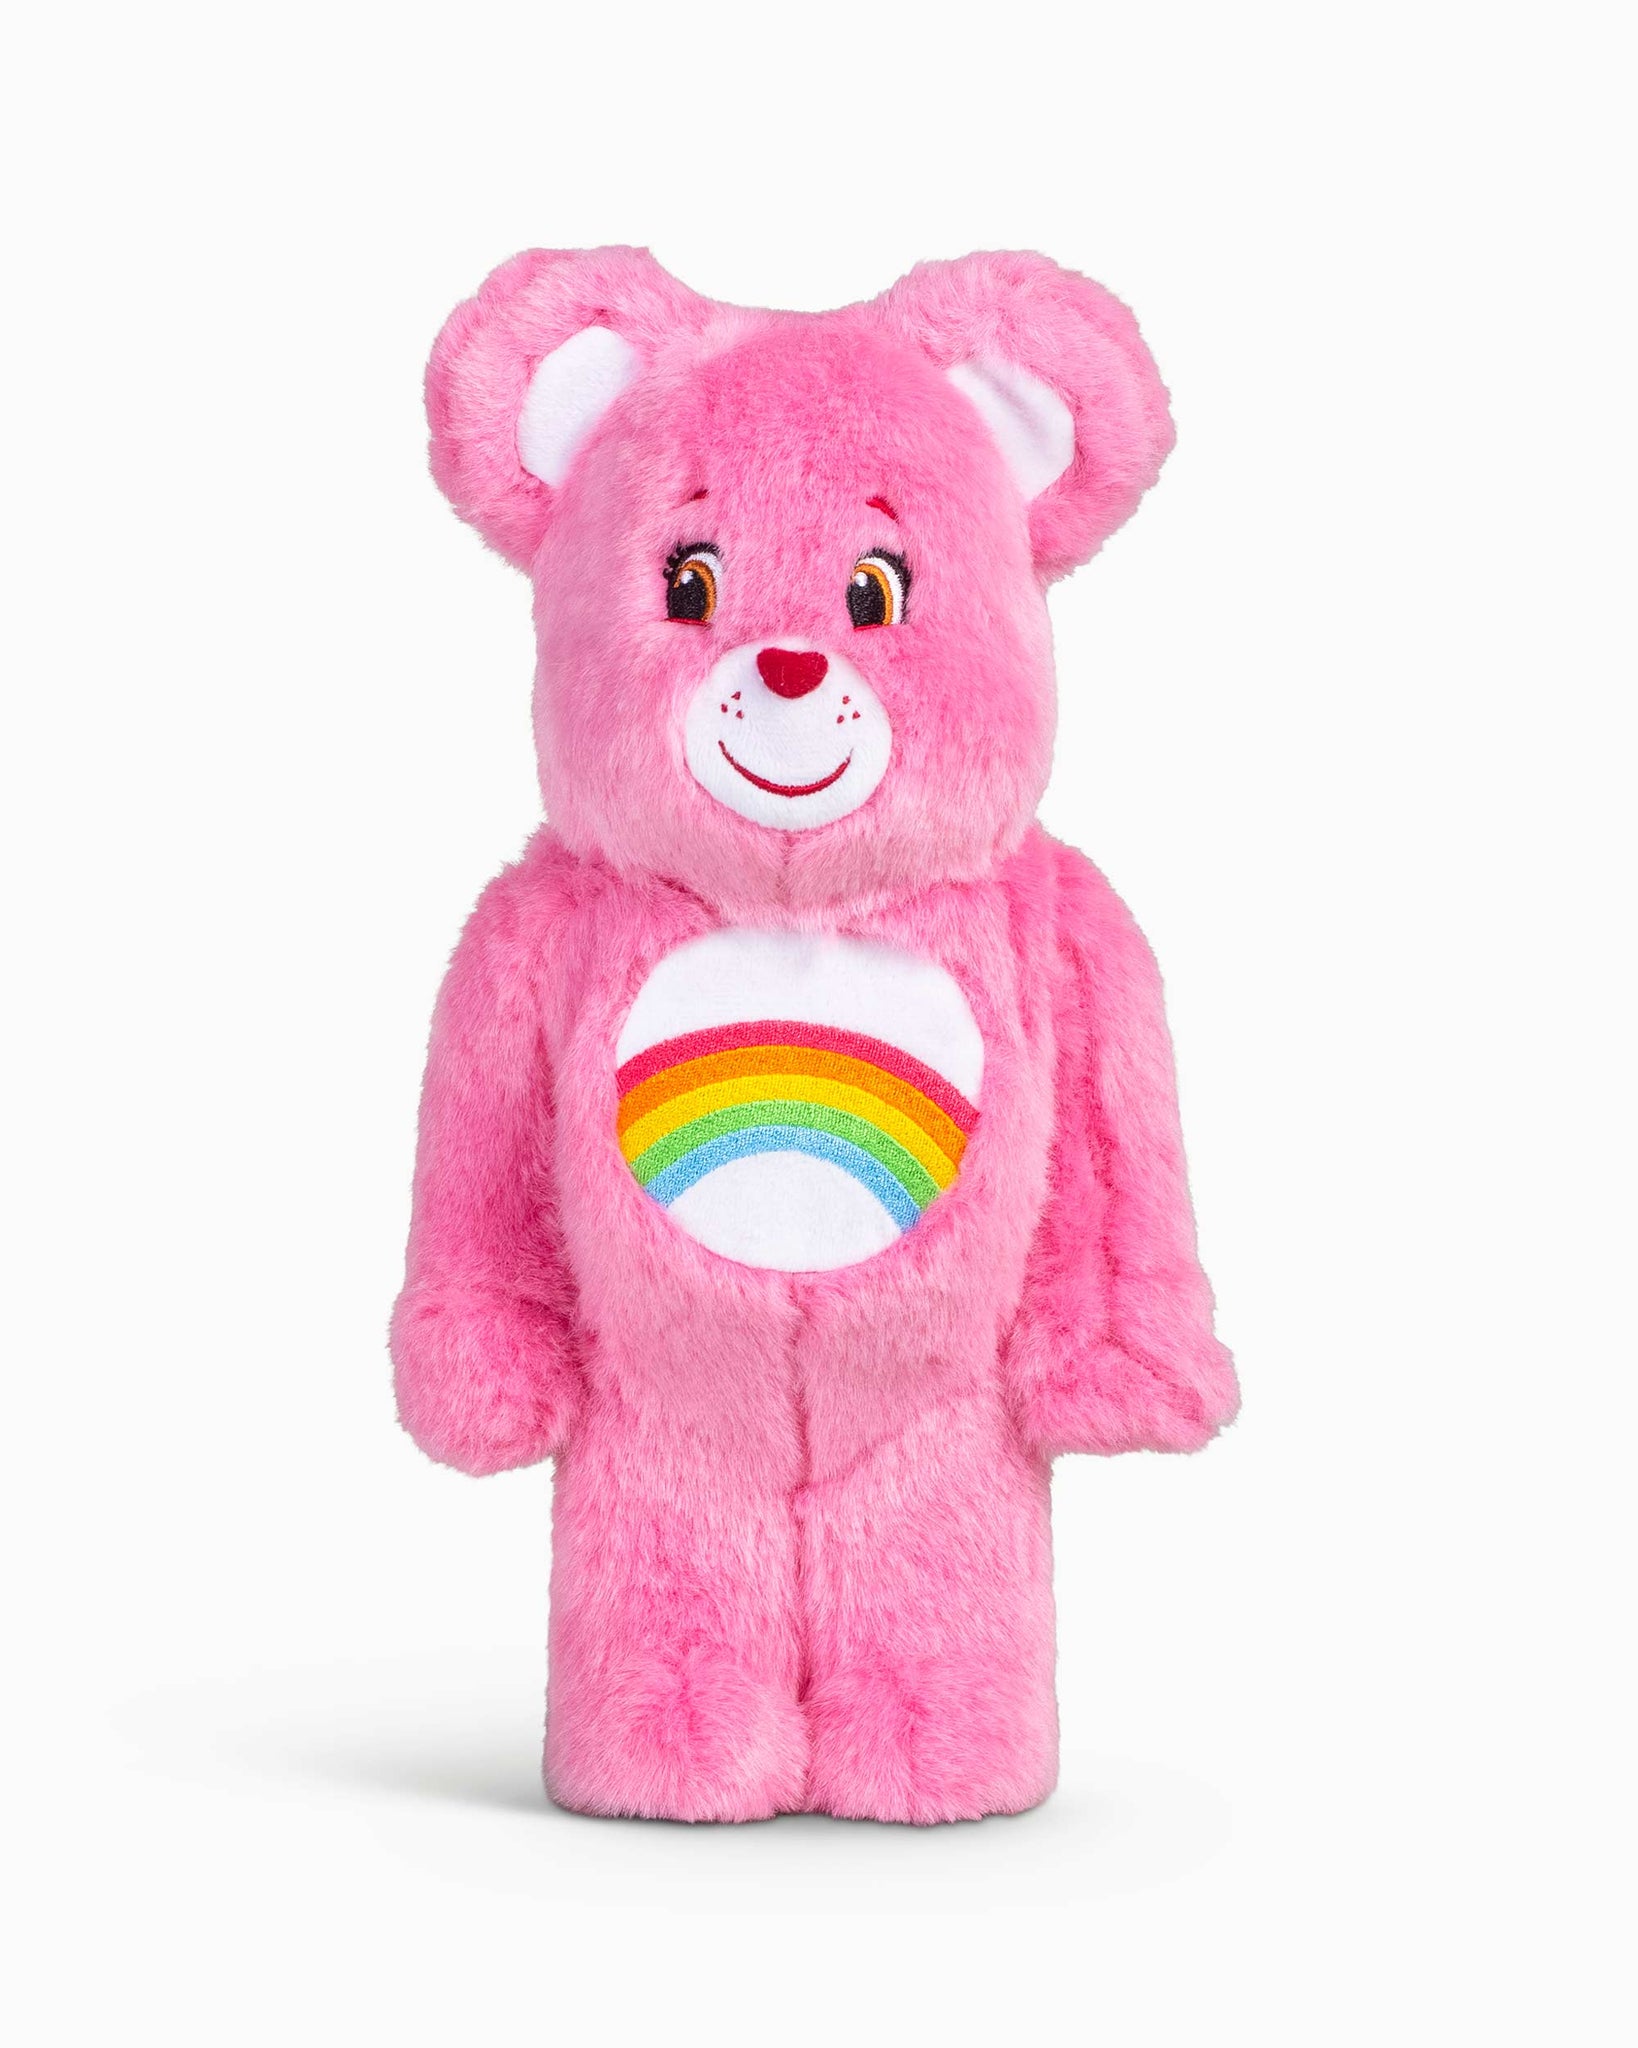 Medicom Toy Cheer Bear Costume Version 400% Bearbrick